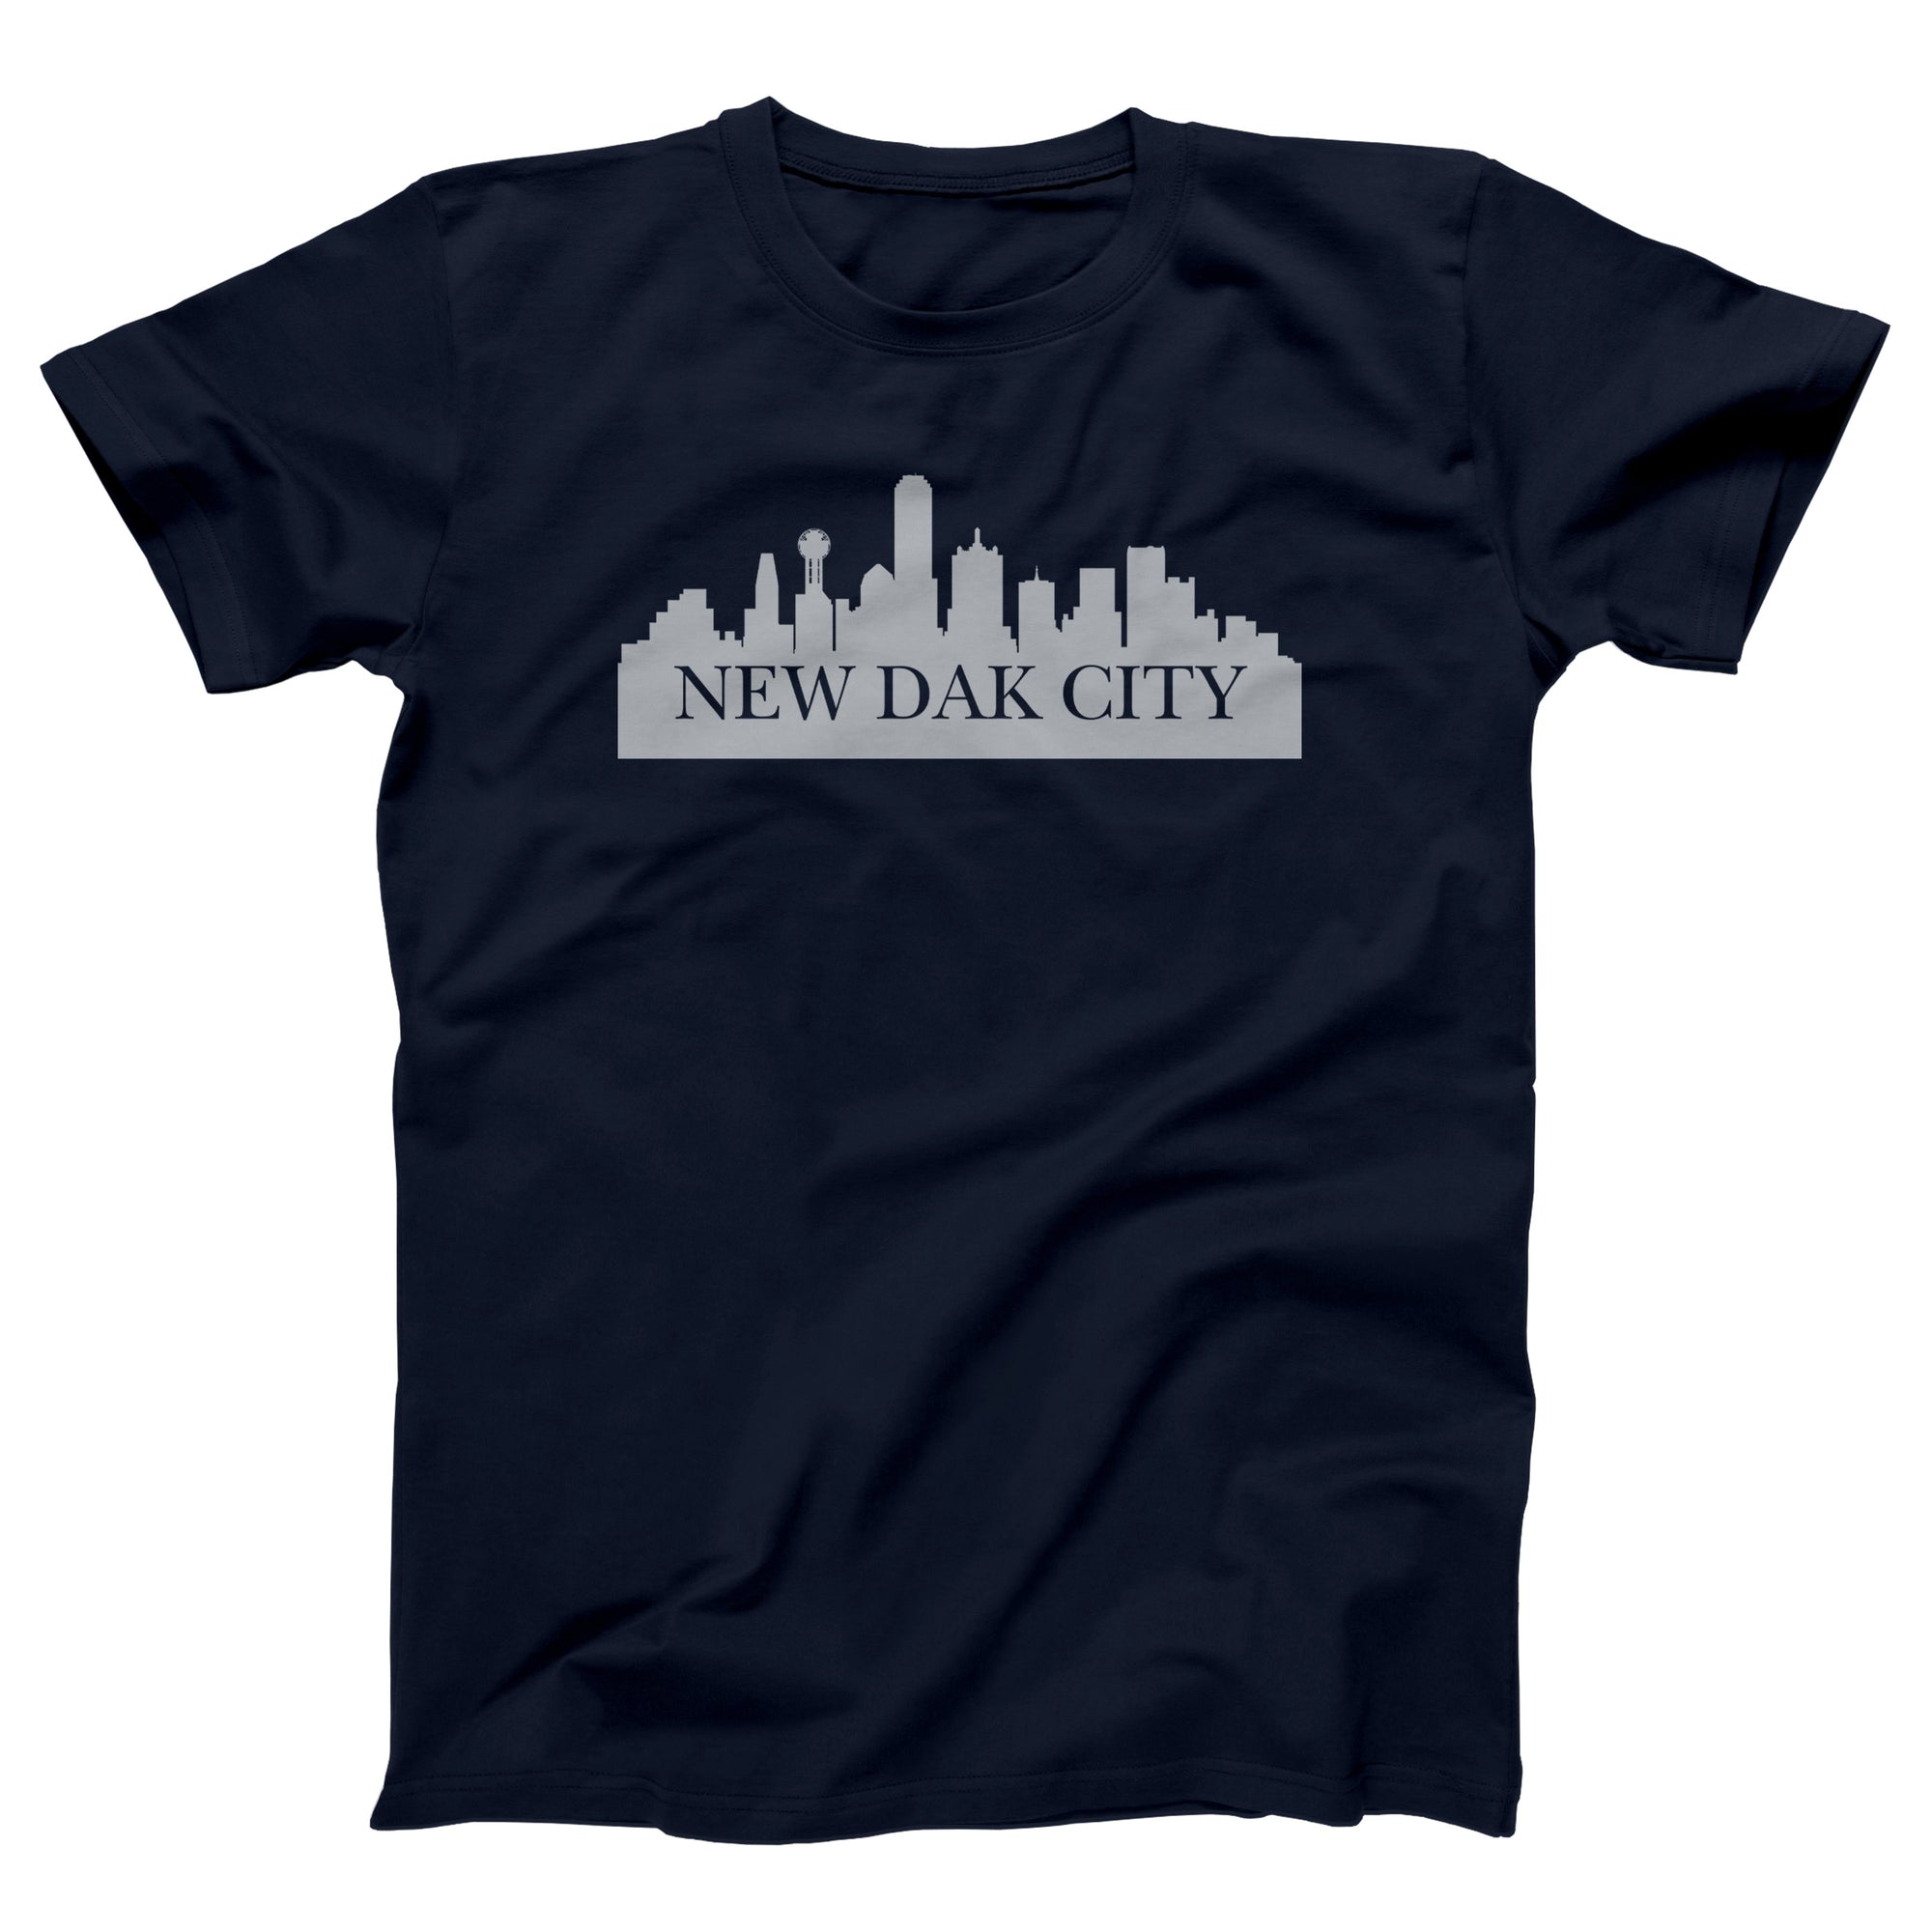 New Dak City Adult Unisex T-Shirt - anishphilip